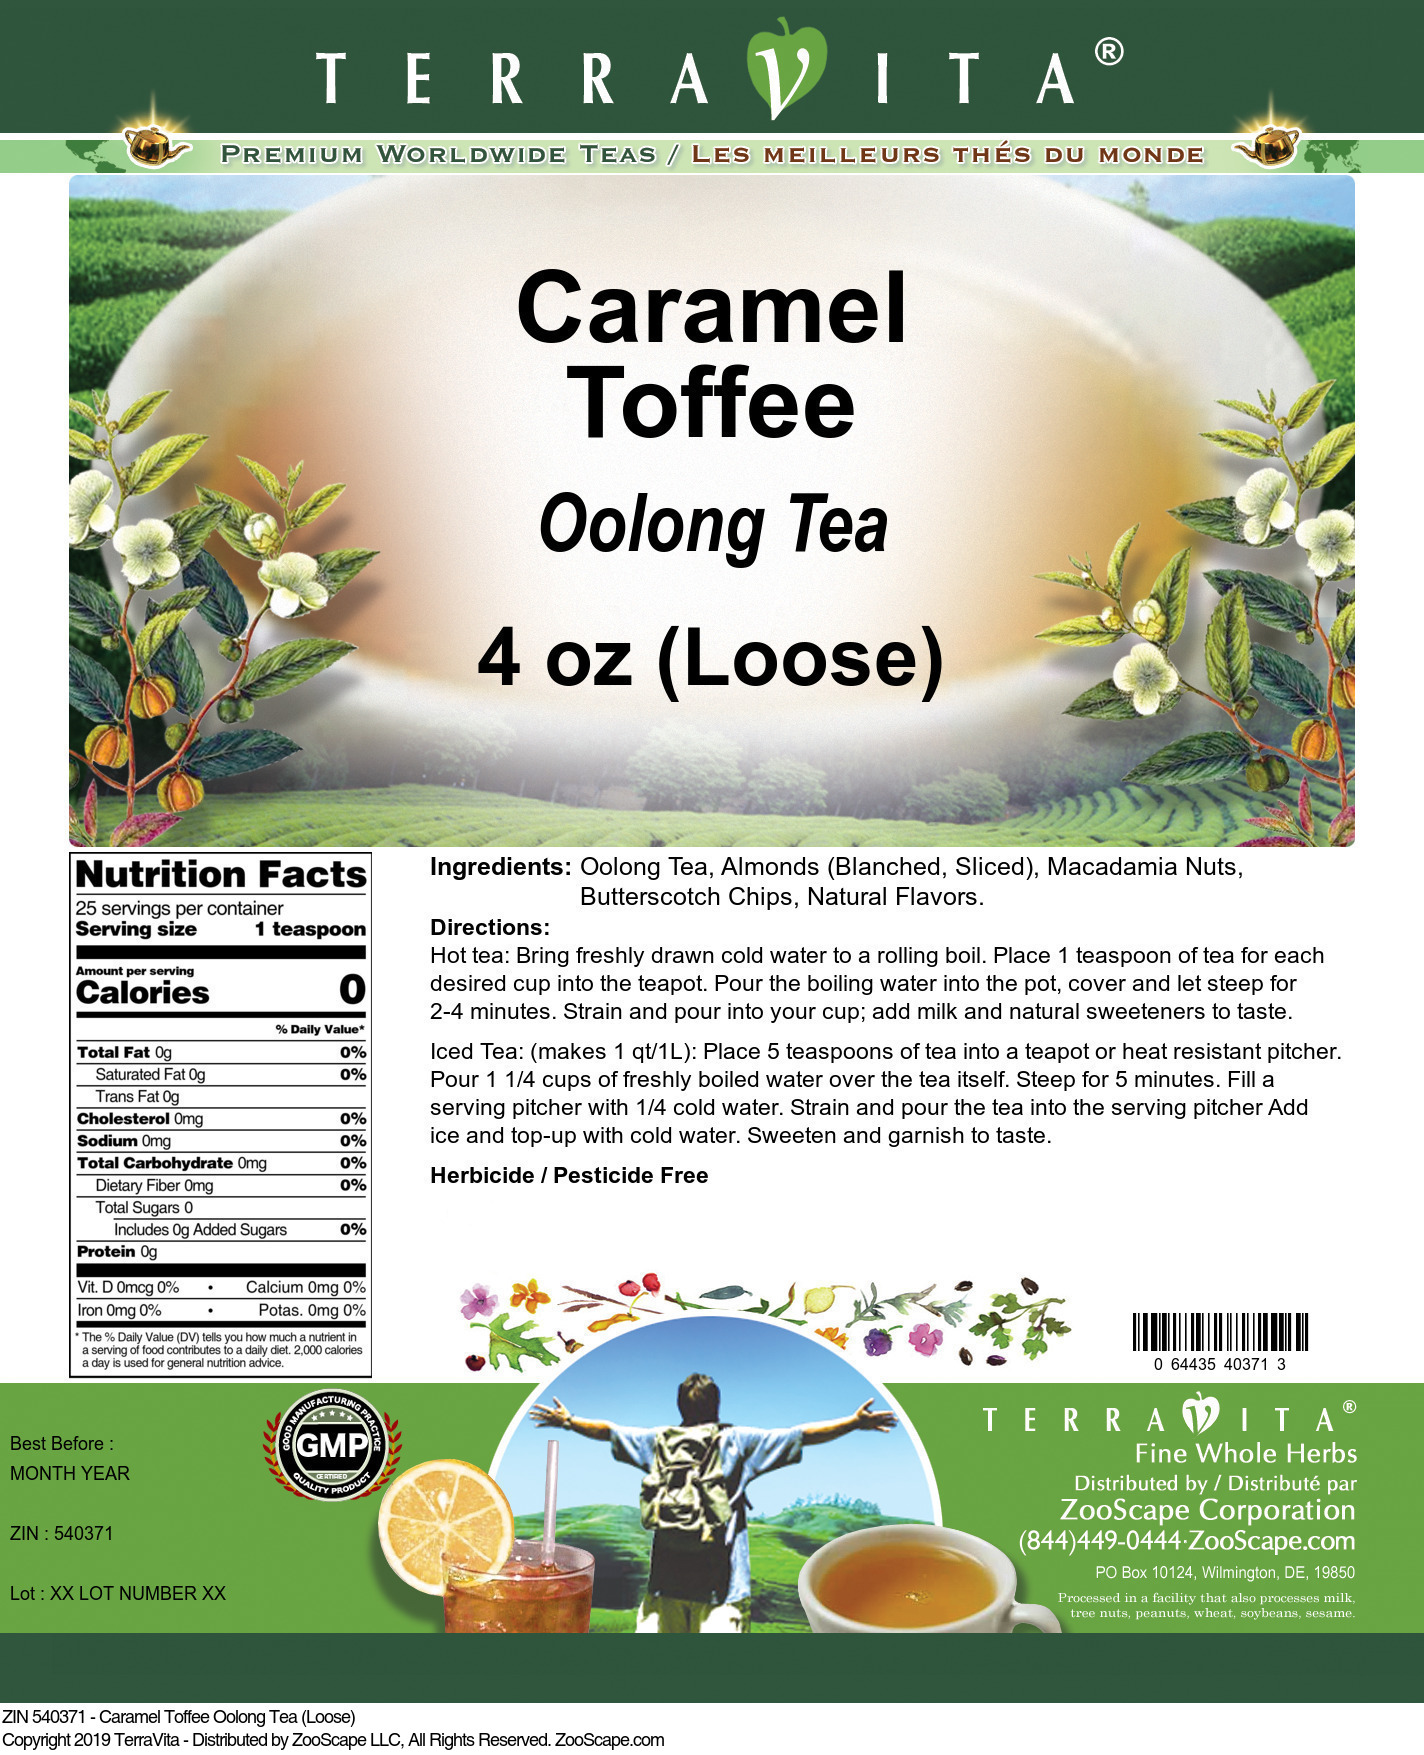 Caramel Toffee Oolong Tea (Loose) - Label